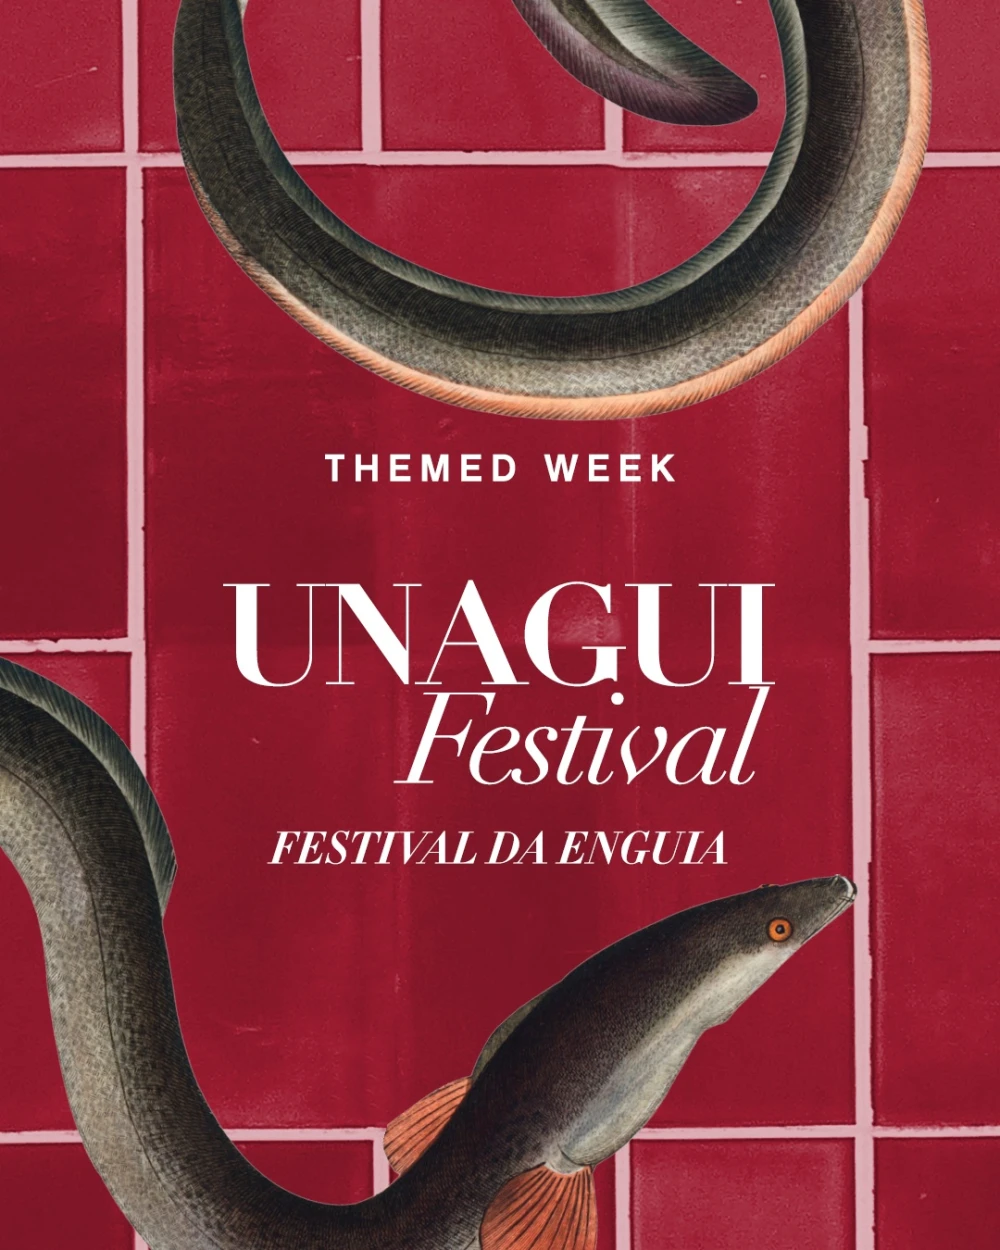 Unagui Festival Themed Week | JNcQUOI Asia